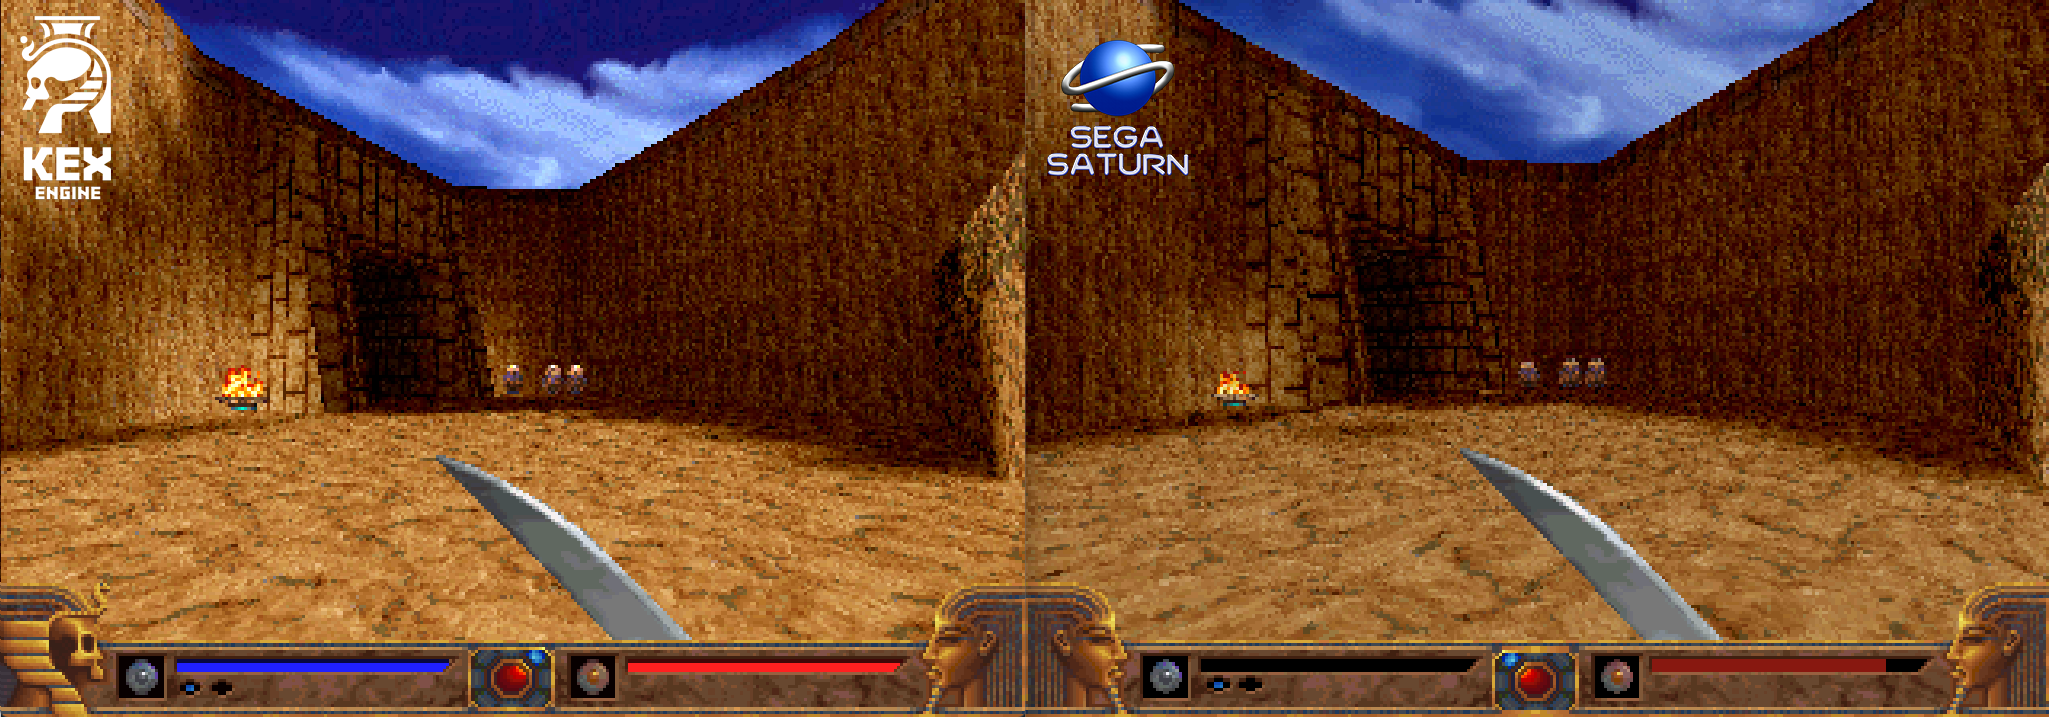 PowerSlave Exhumed - Tweak Game Settings to Emulate Saturn Visuals - Comparisons - 736FDC6